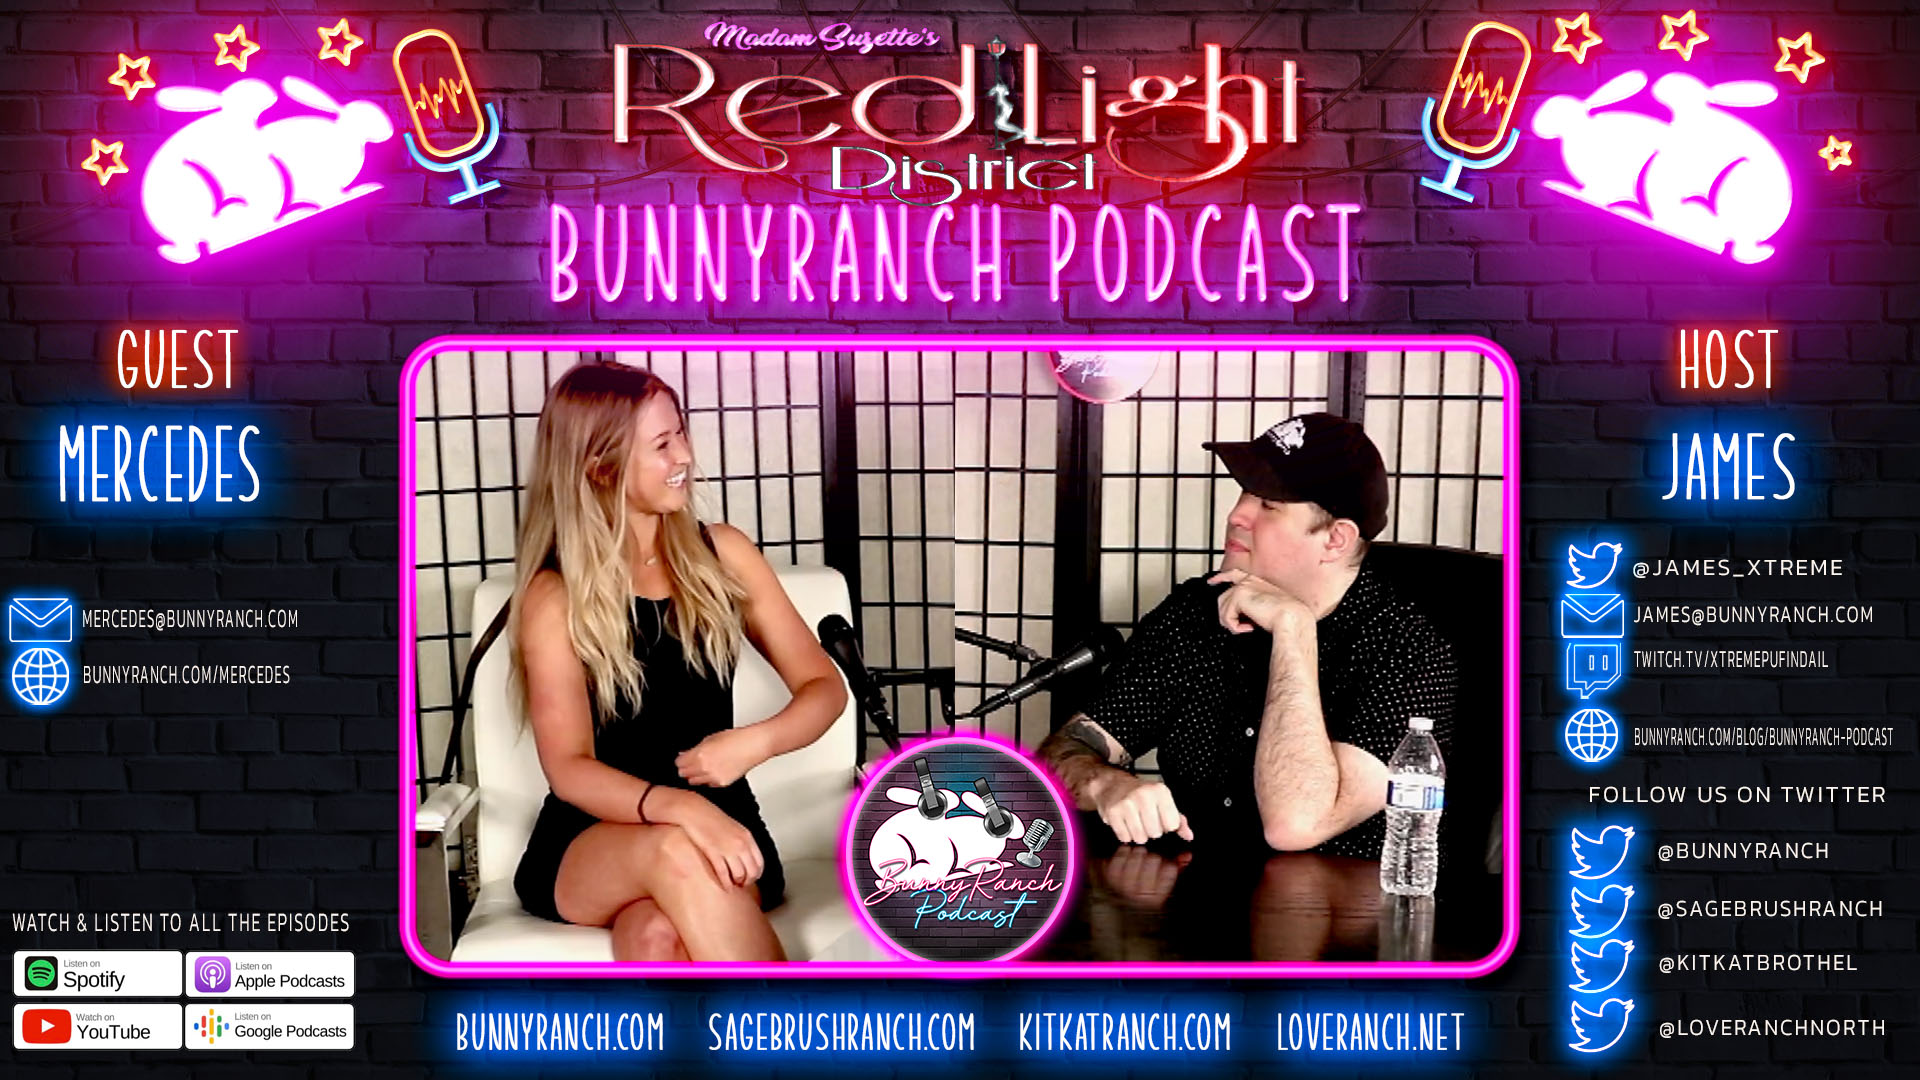 Bunny ranch podcast